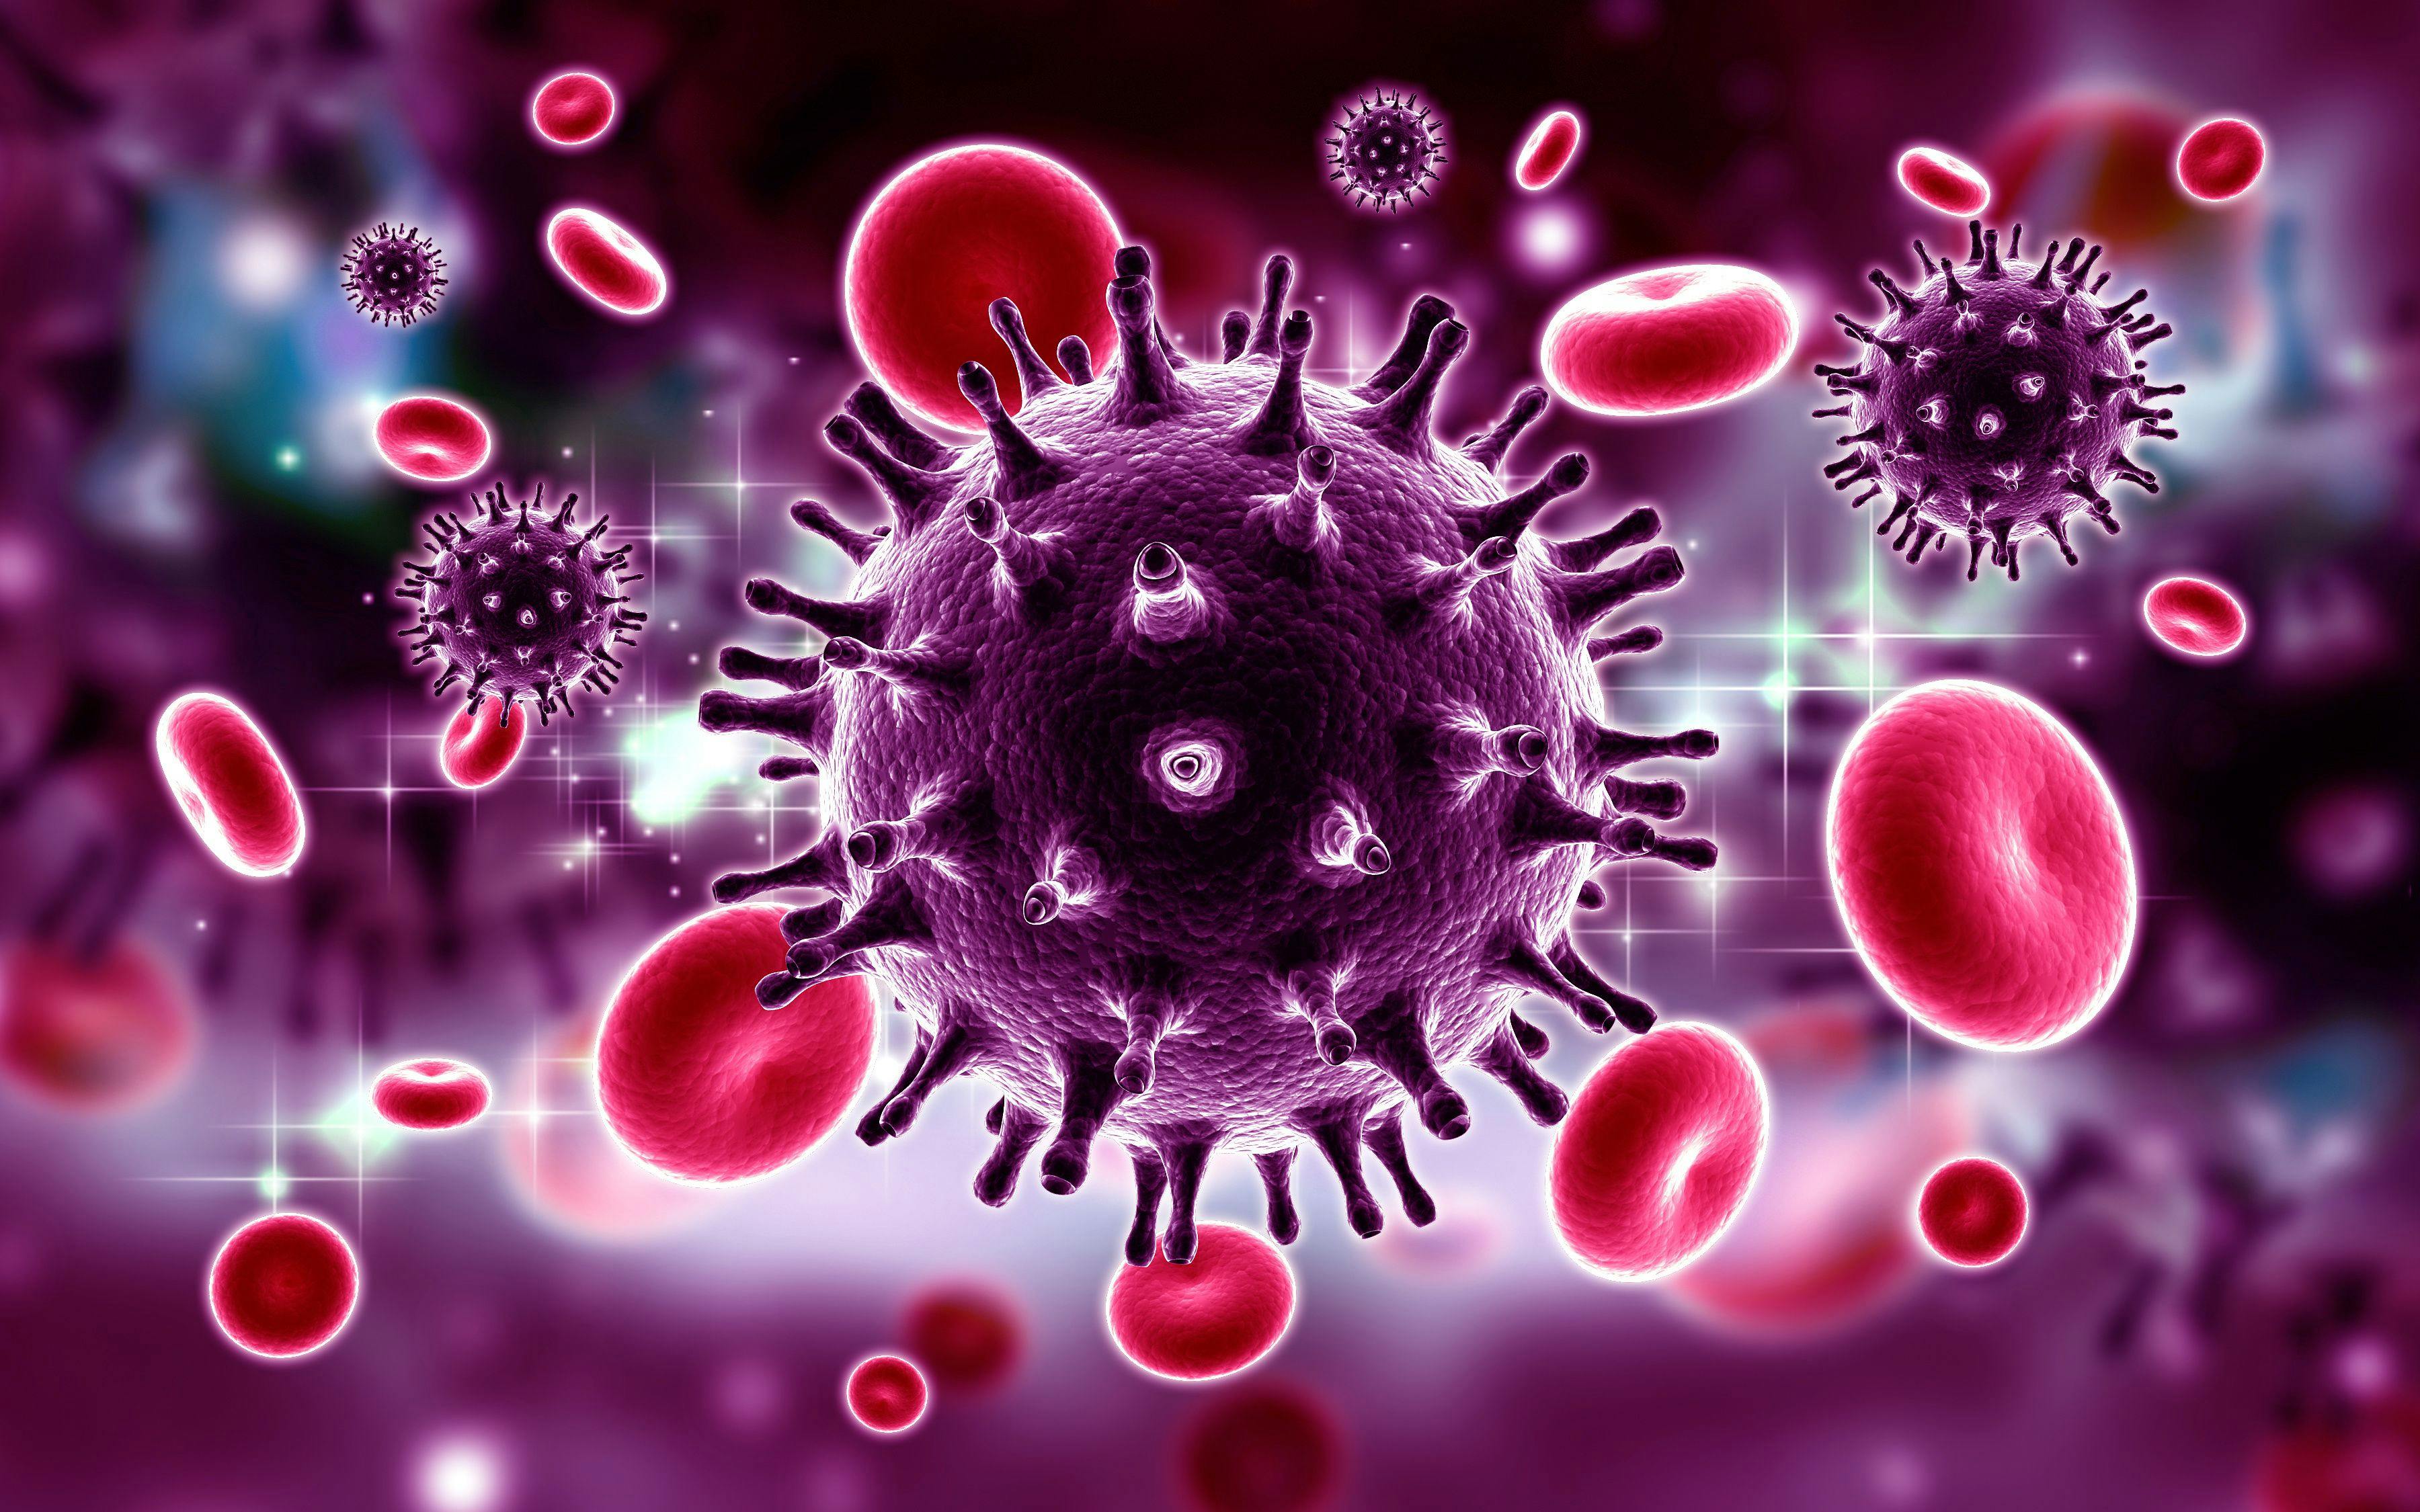 HIV virus in bloodstream | RAJCREATIONZS | stock.adobe.com